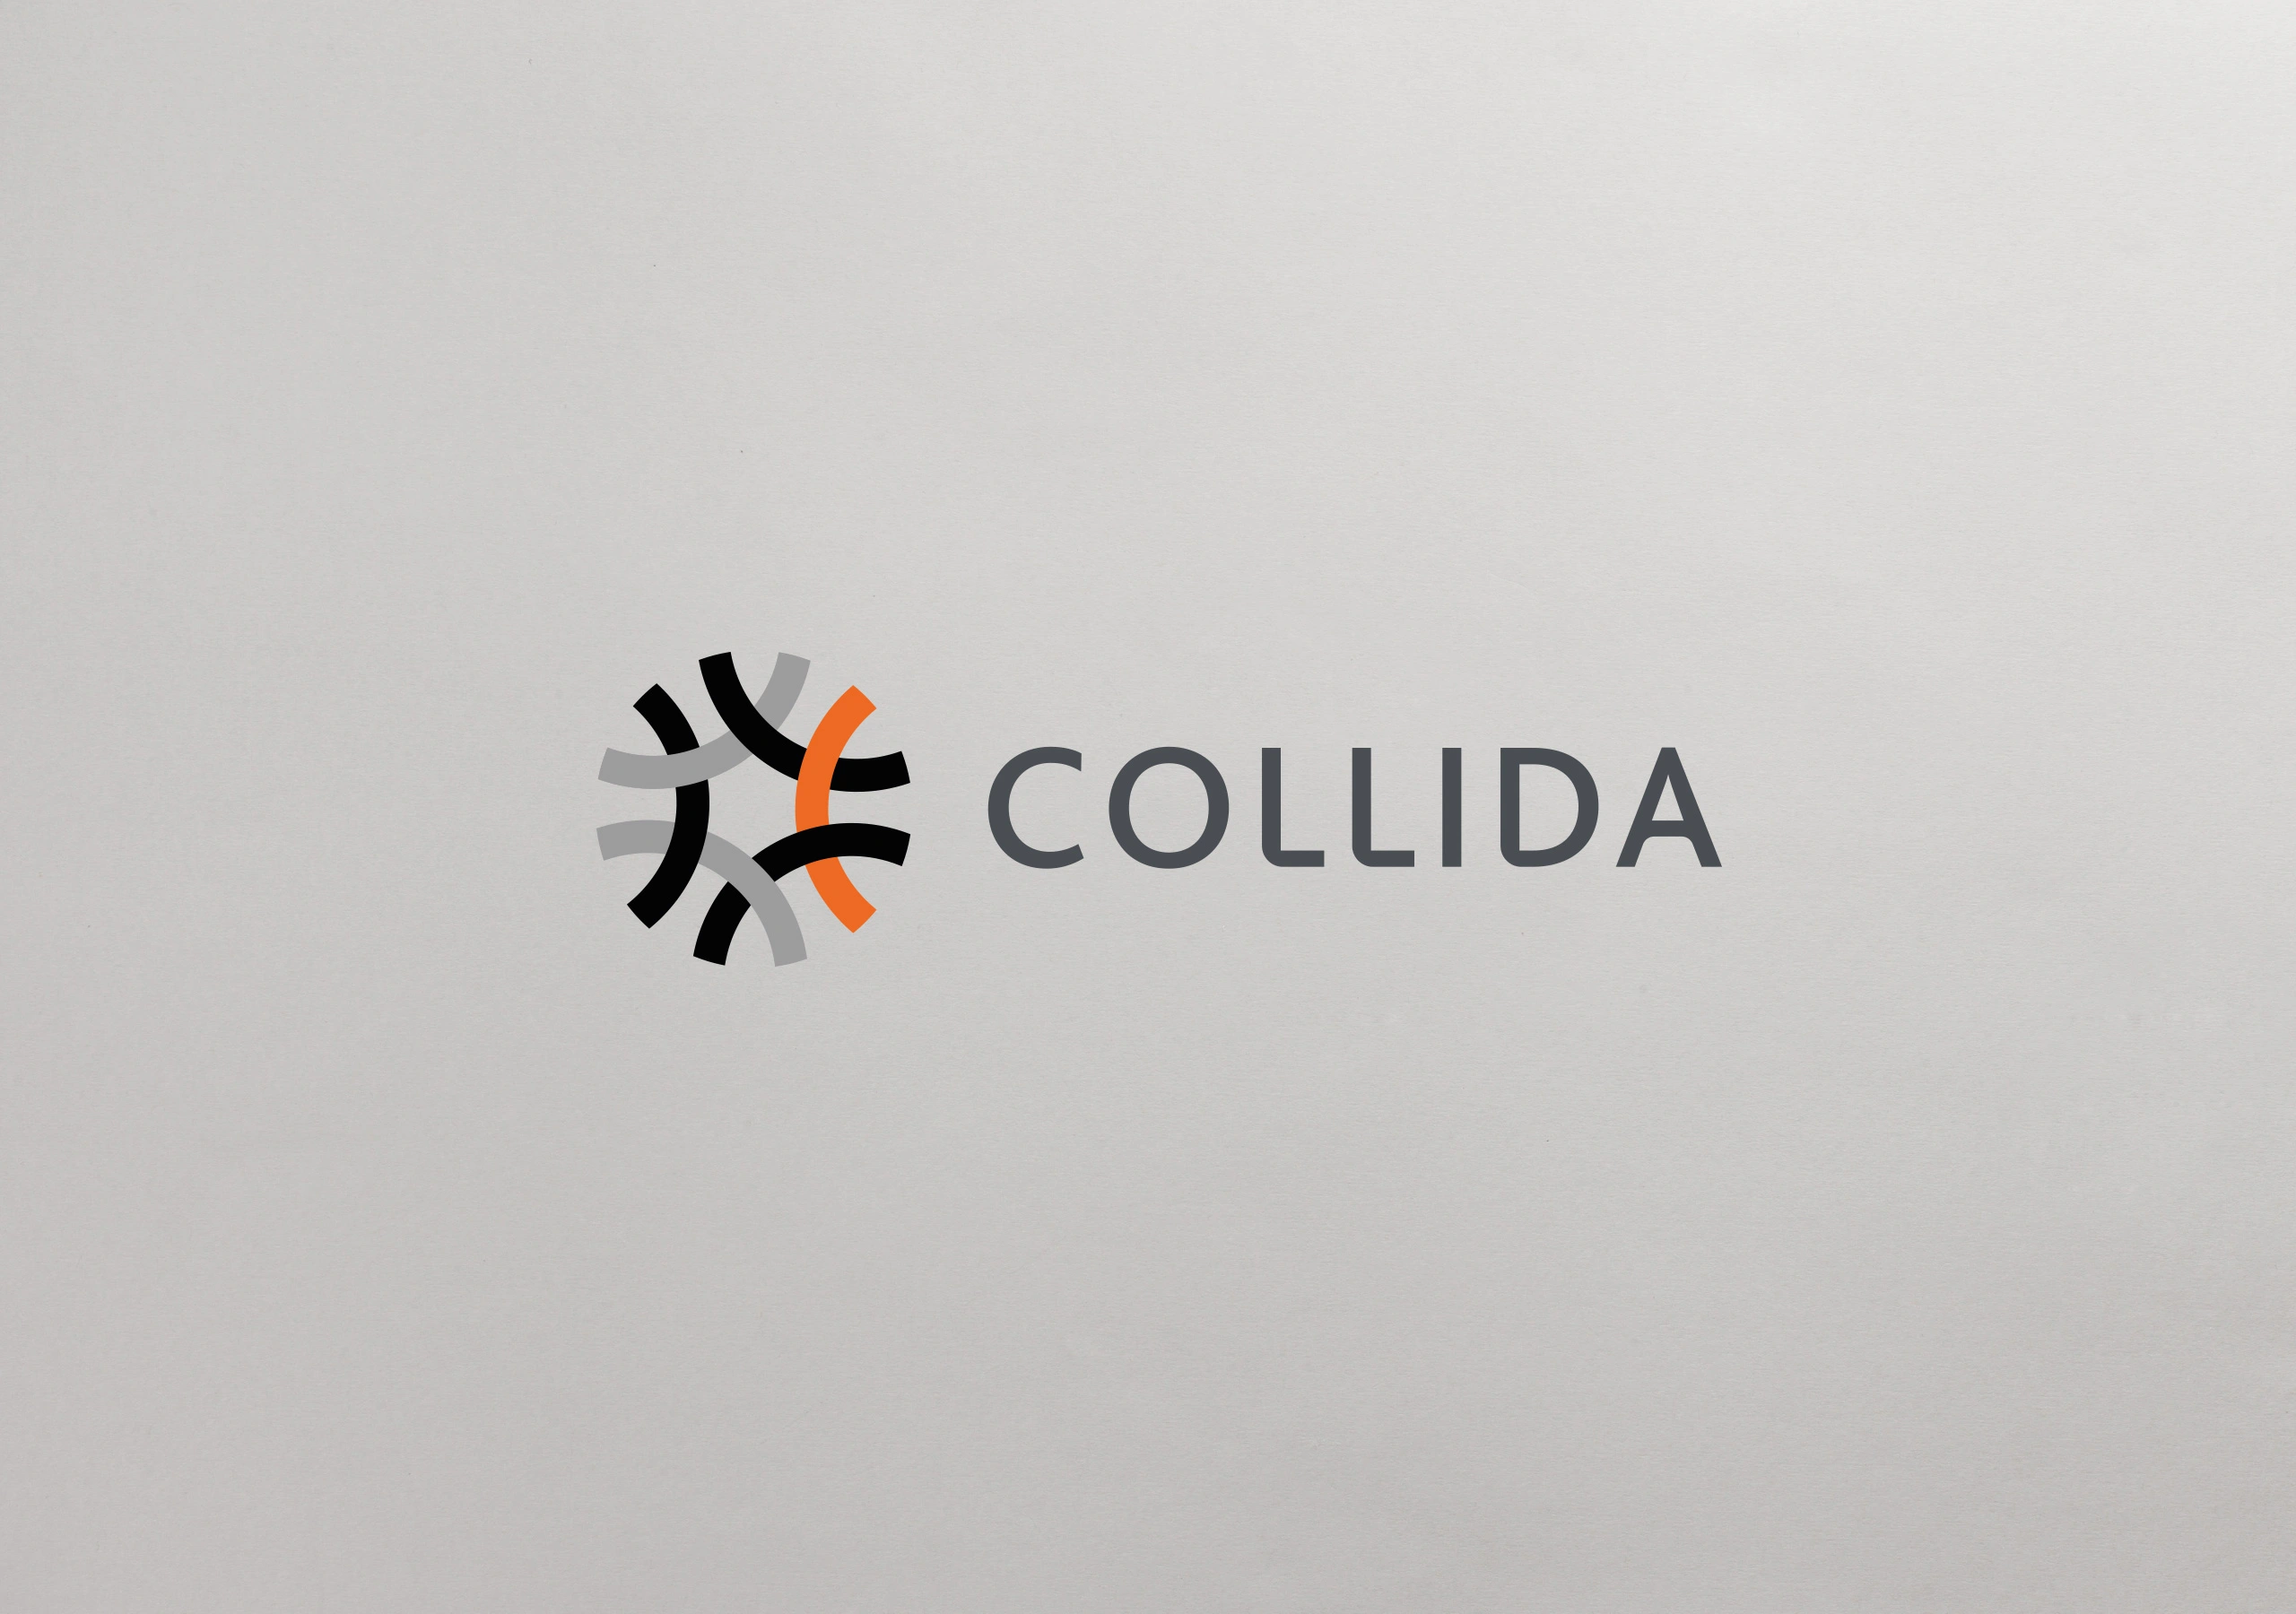 Collida new logo